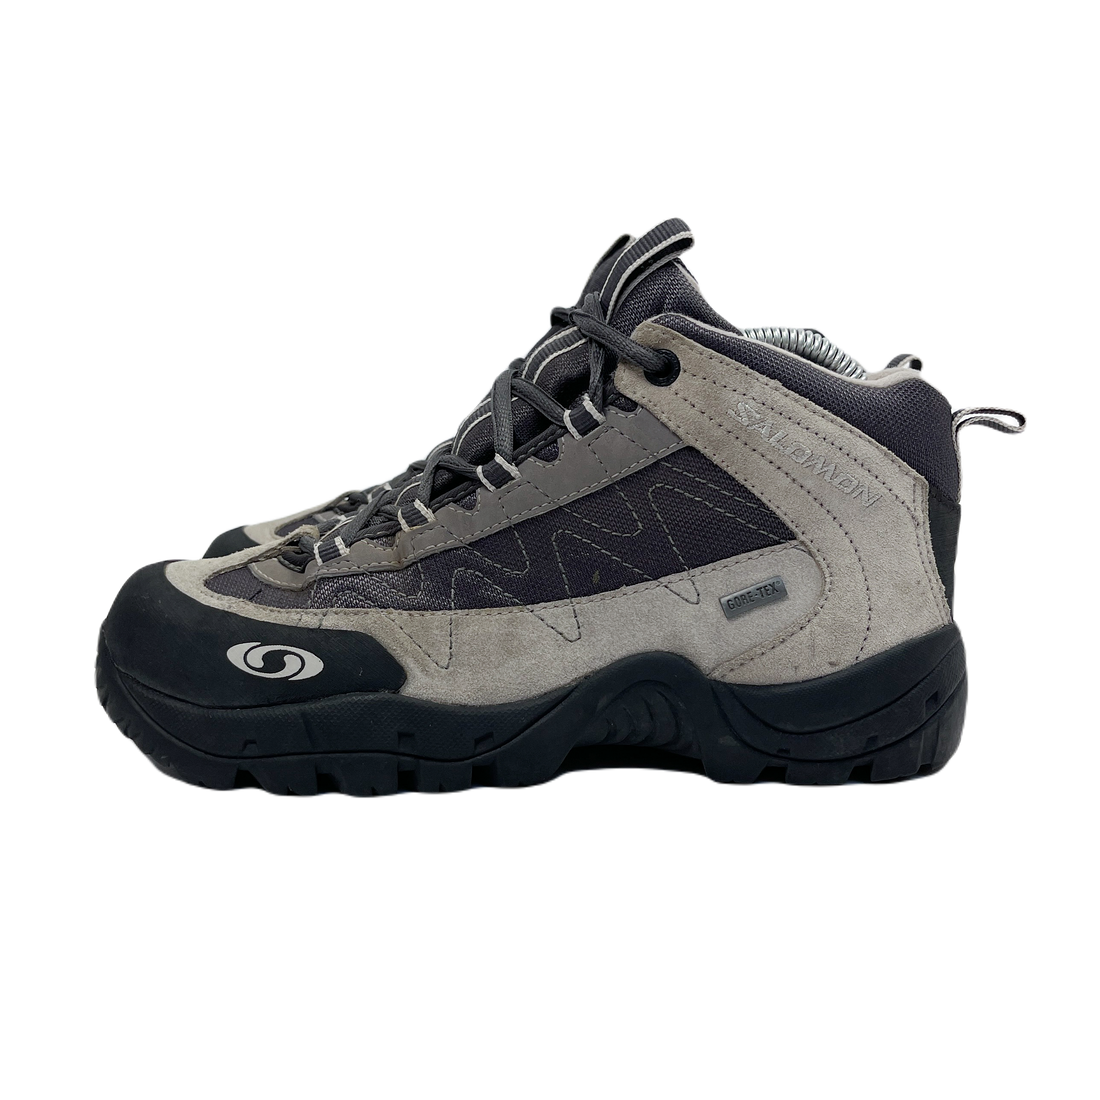 Salomon Gore-tex Grey Hiking Boots 2003